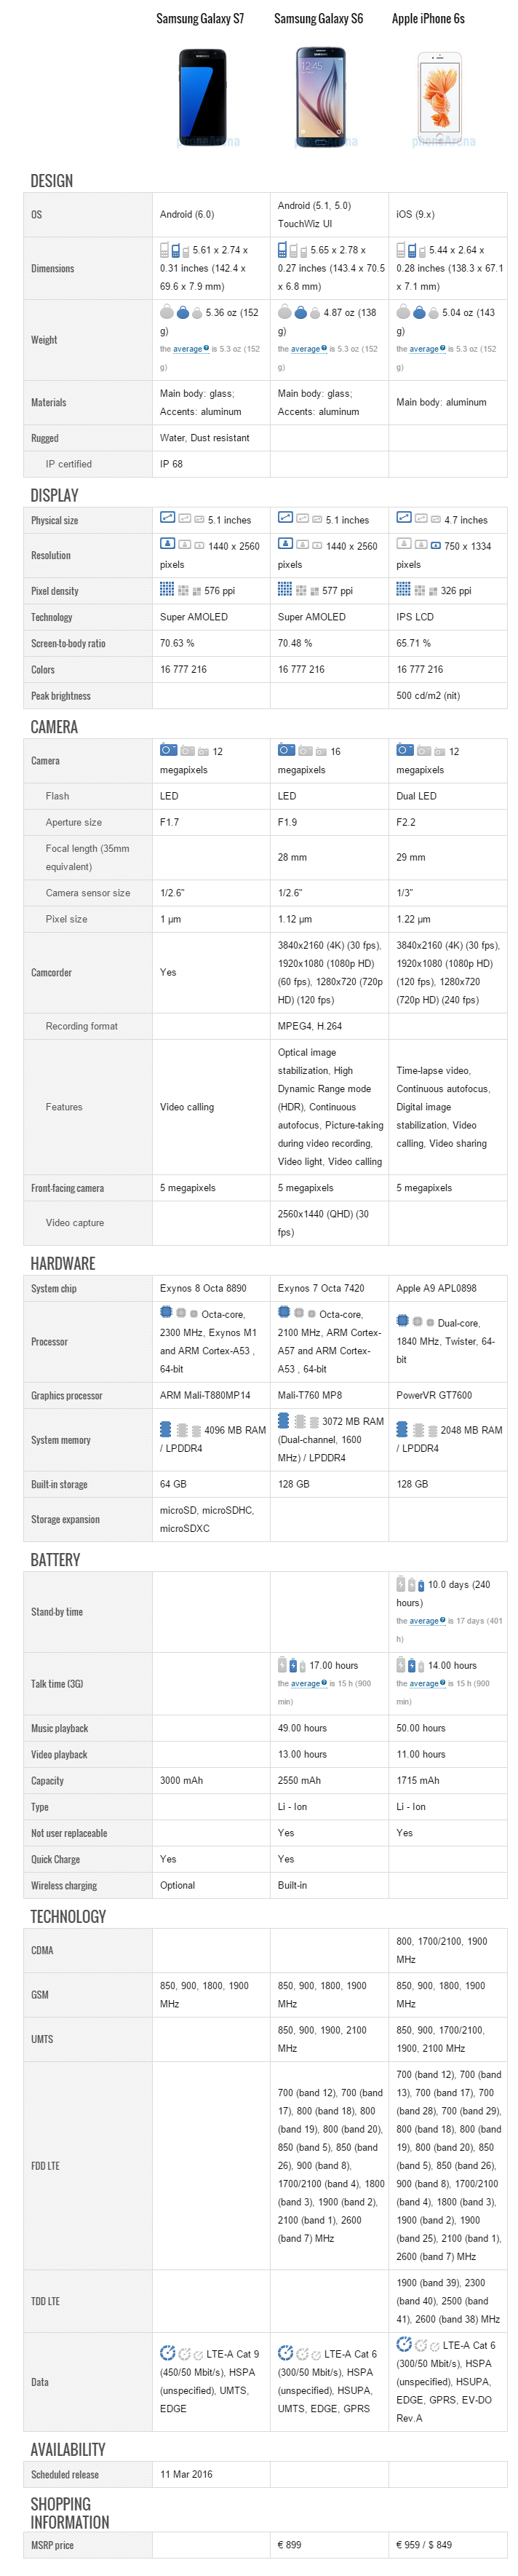 Samsung Galaxy S7 contro la concorrenza - iDevice.ro